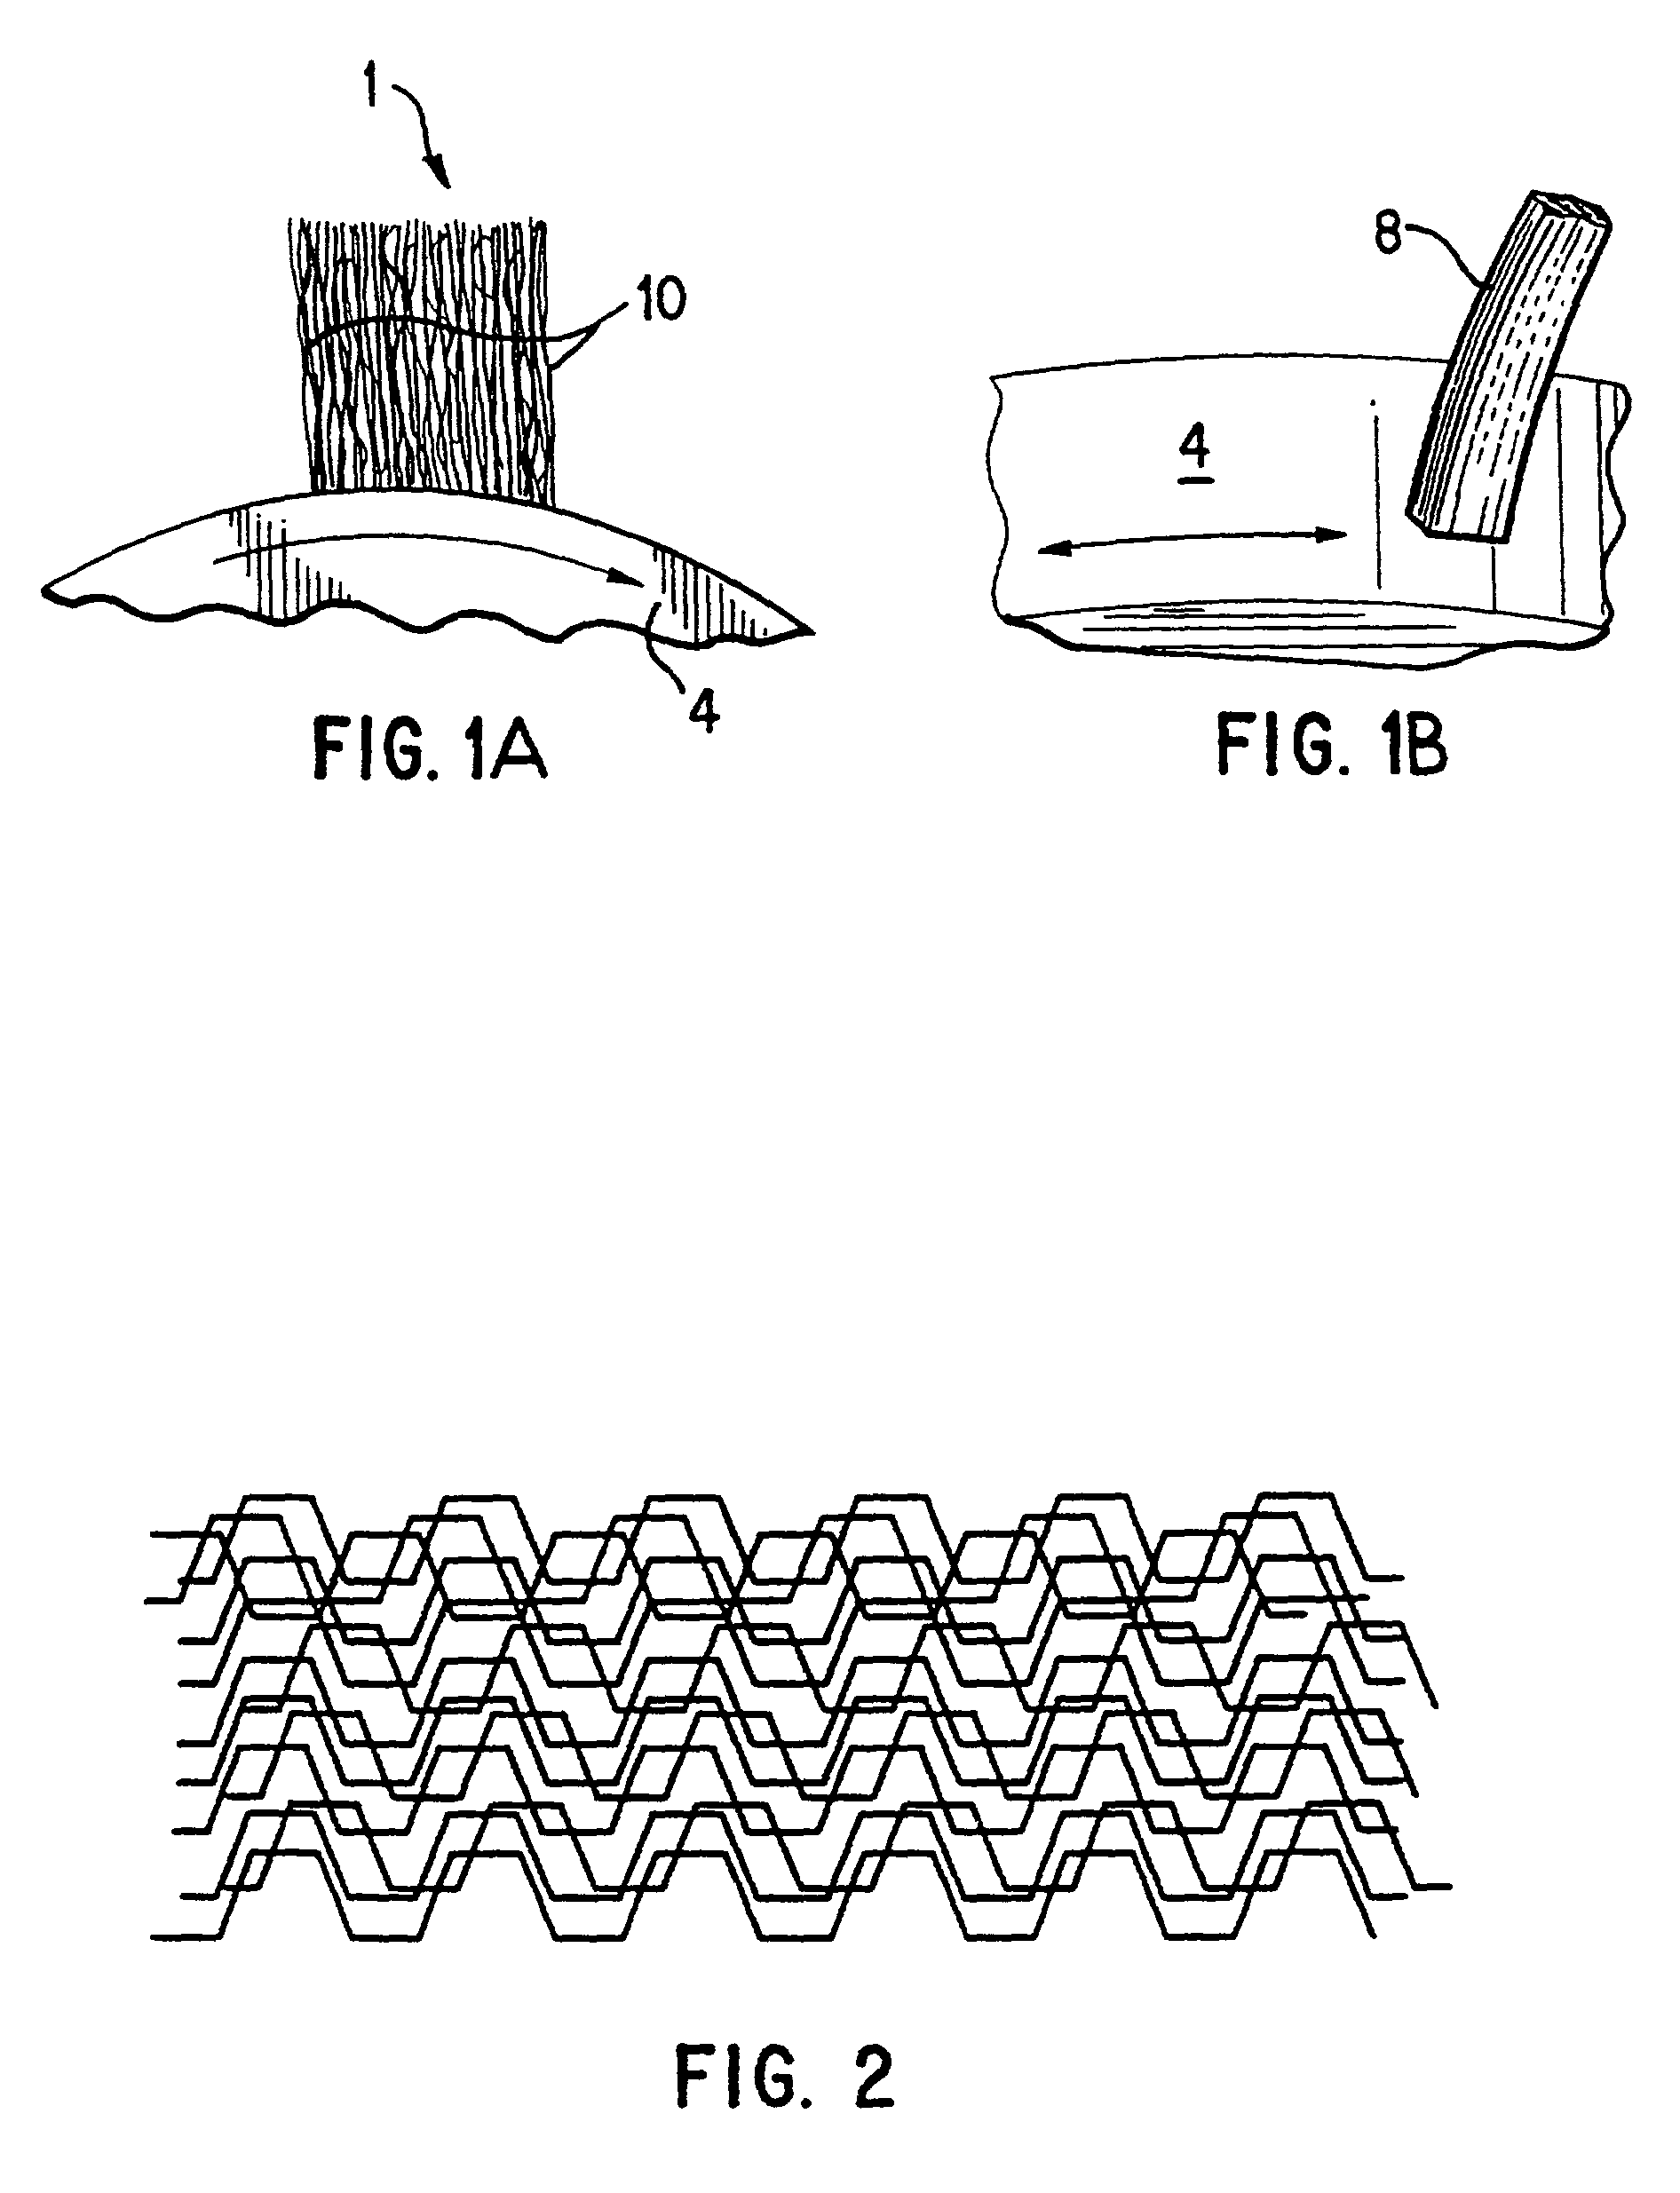 Continuous metal fiber brushes